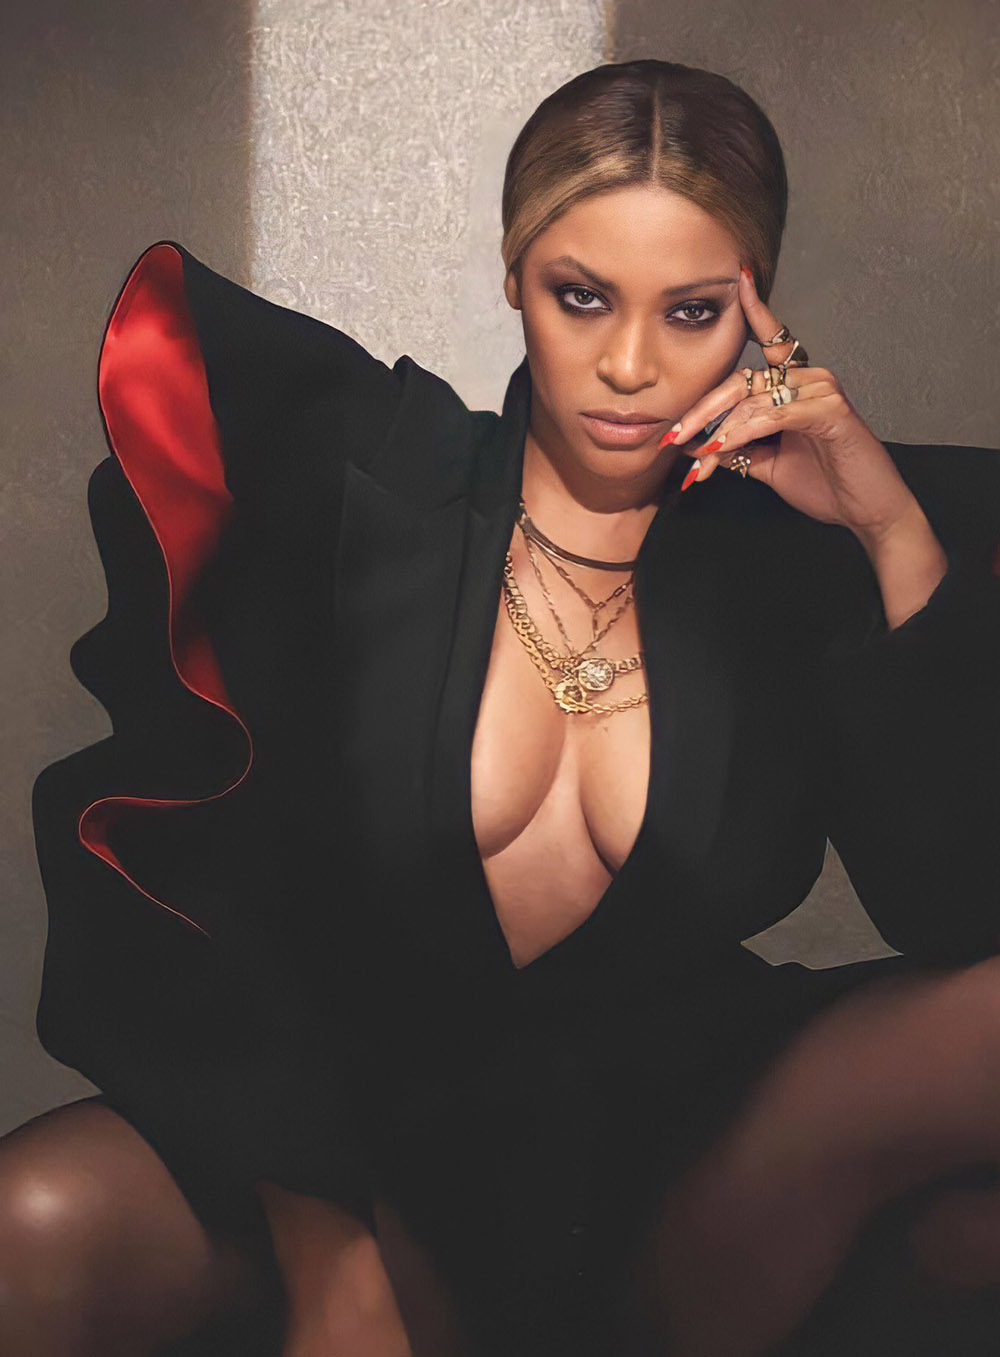 Beyoncé covers British Vogue December 2020 by Kennedi Carter